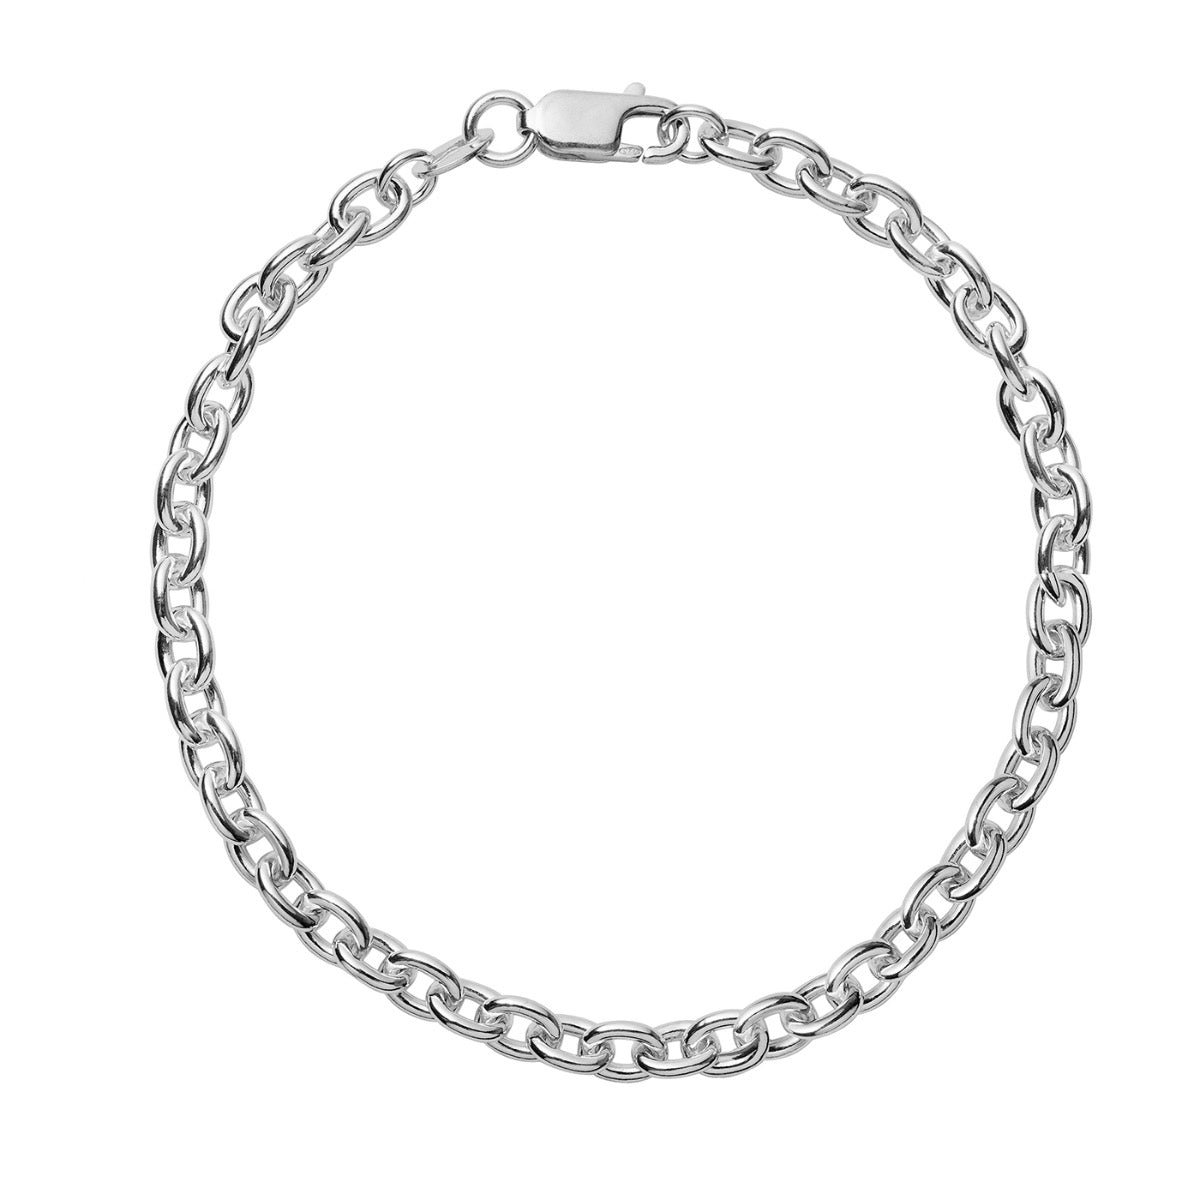 Silver Charm Bracelet | Hersey & Son Silversmiths